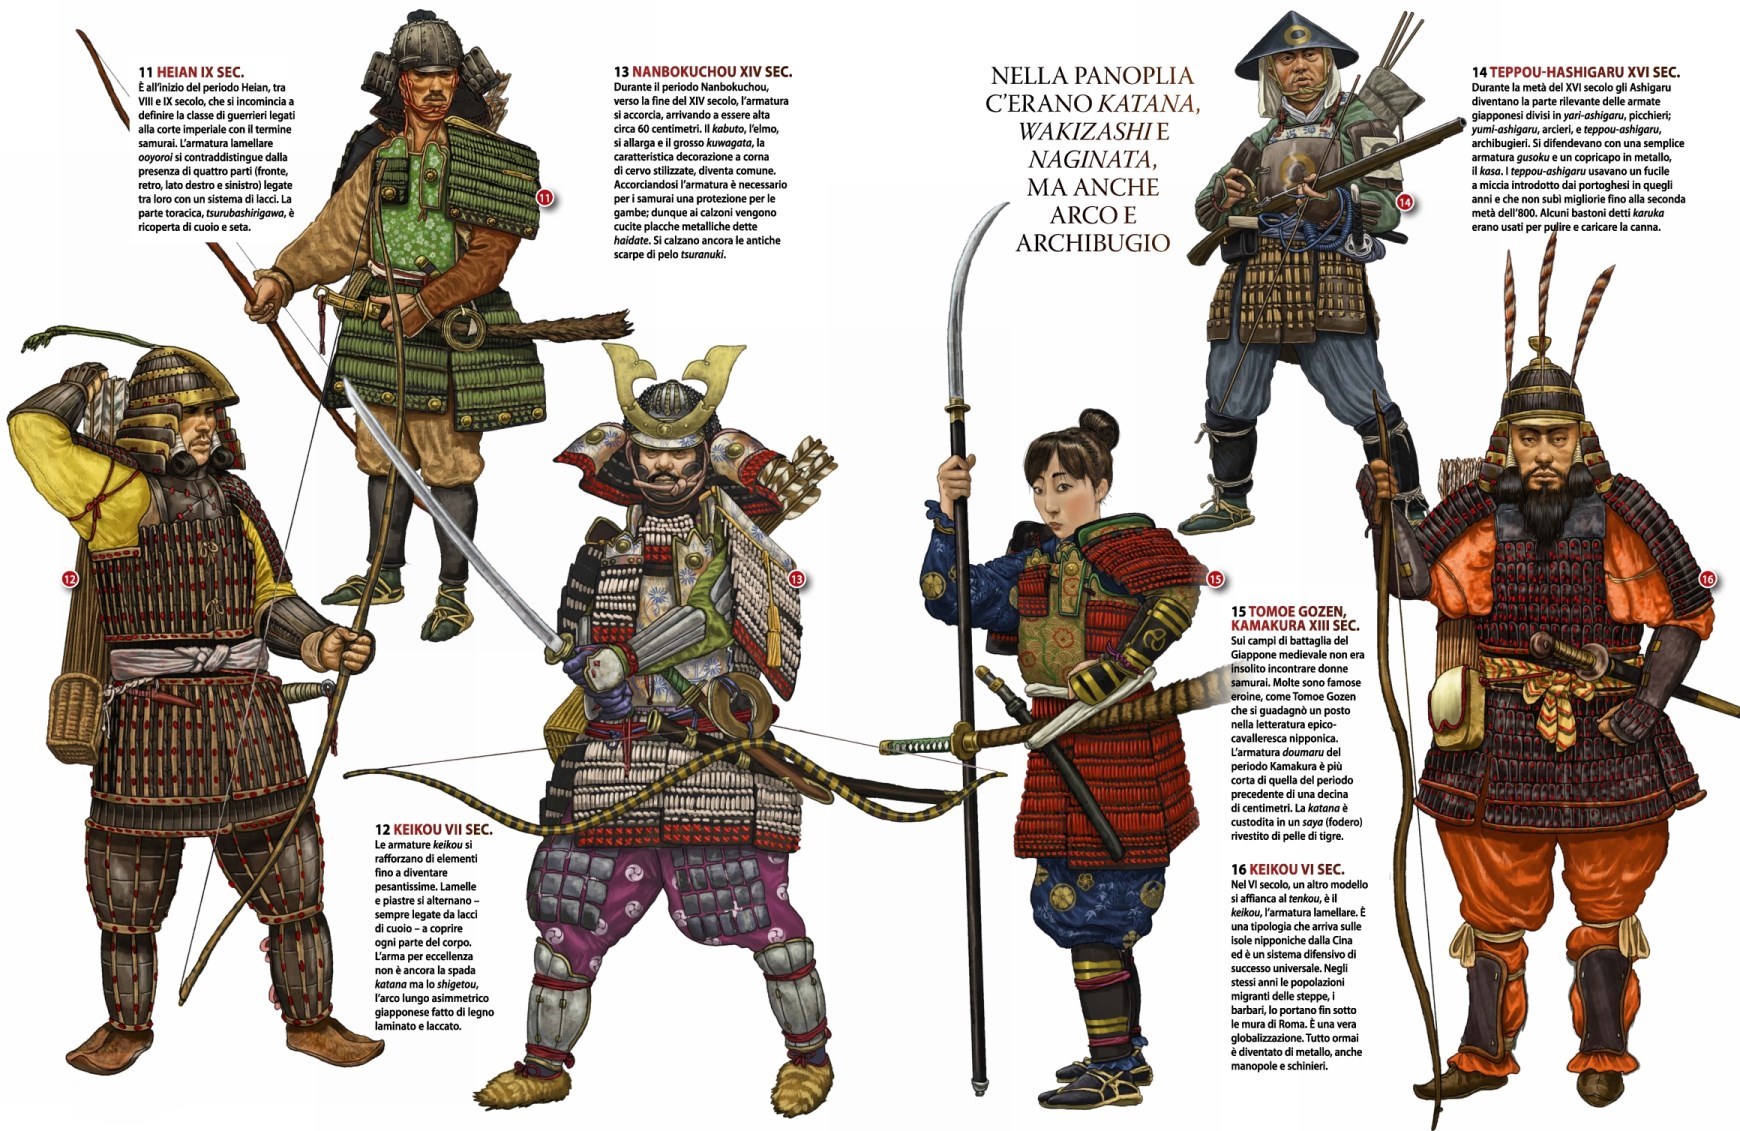 1706410343 200 Samurai The warrior class of feudal Japan